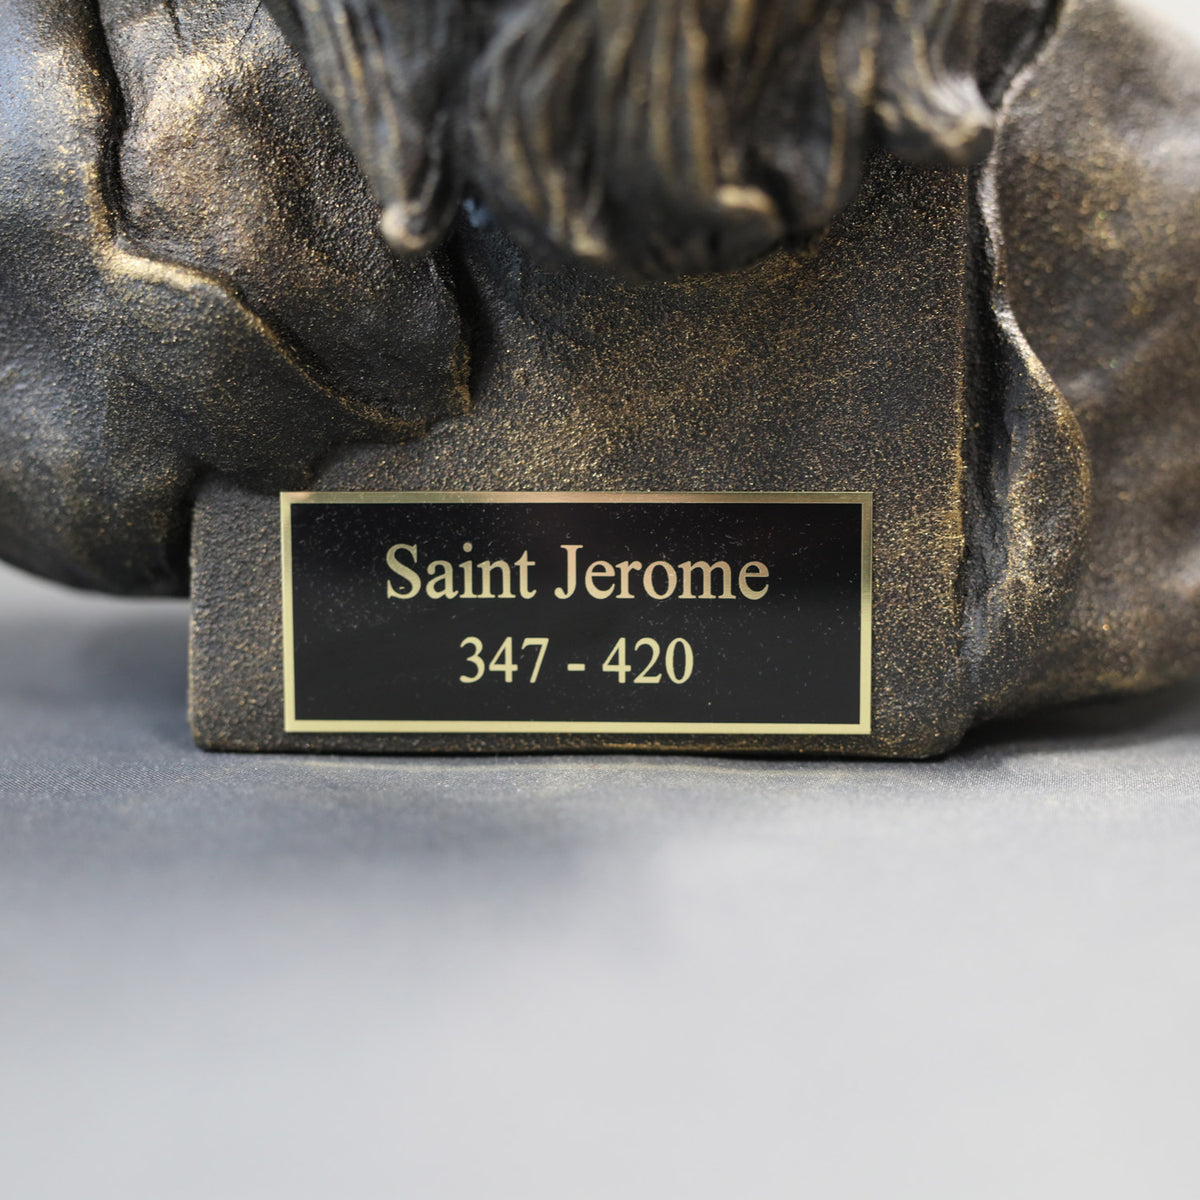 Saint Jerome - Sculpture